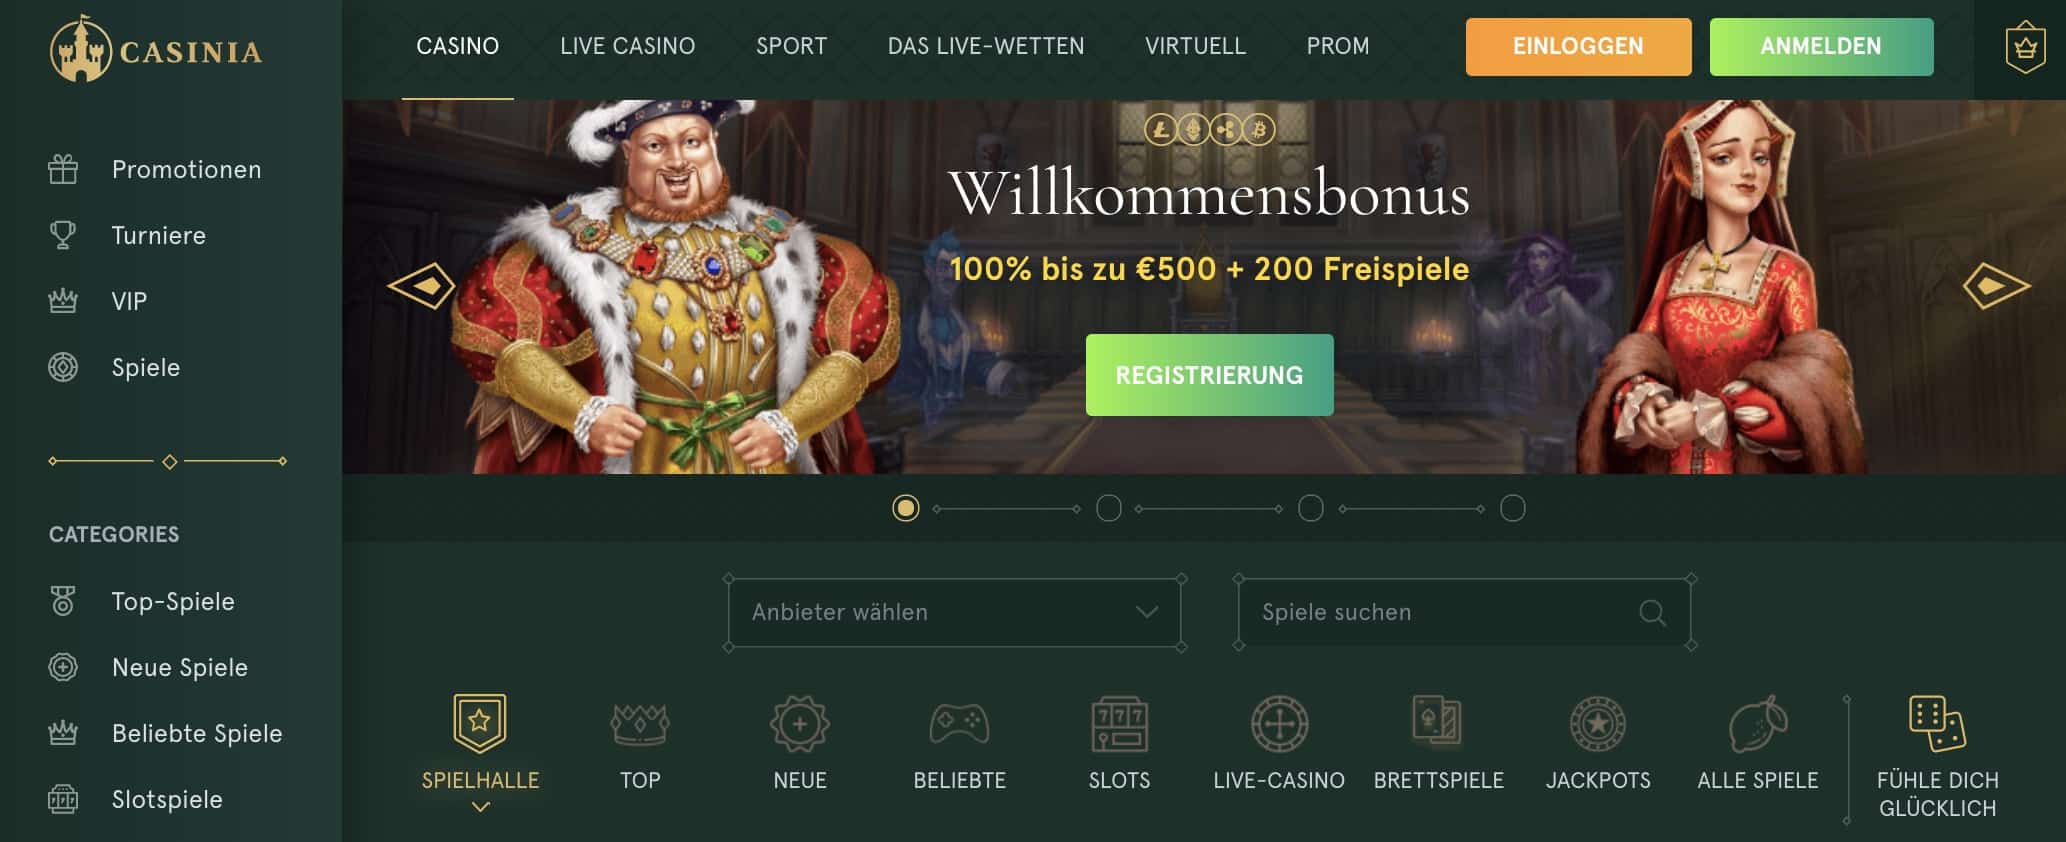 casinia online casino homepage